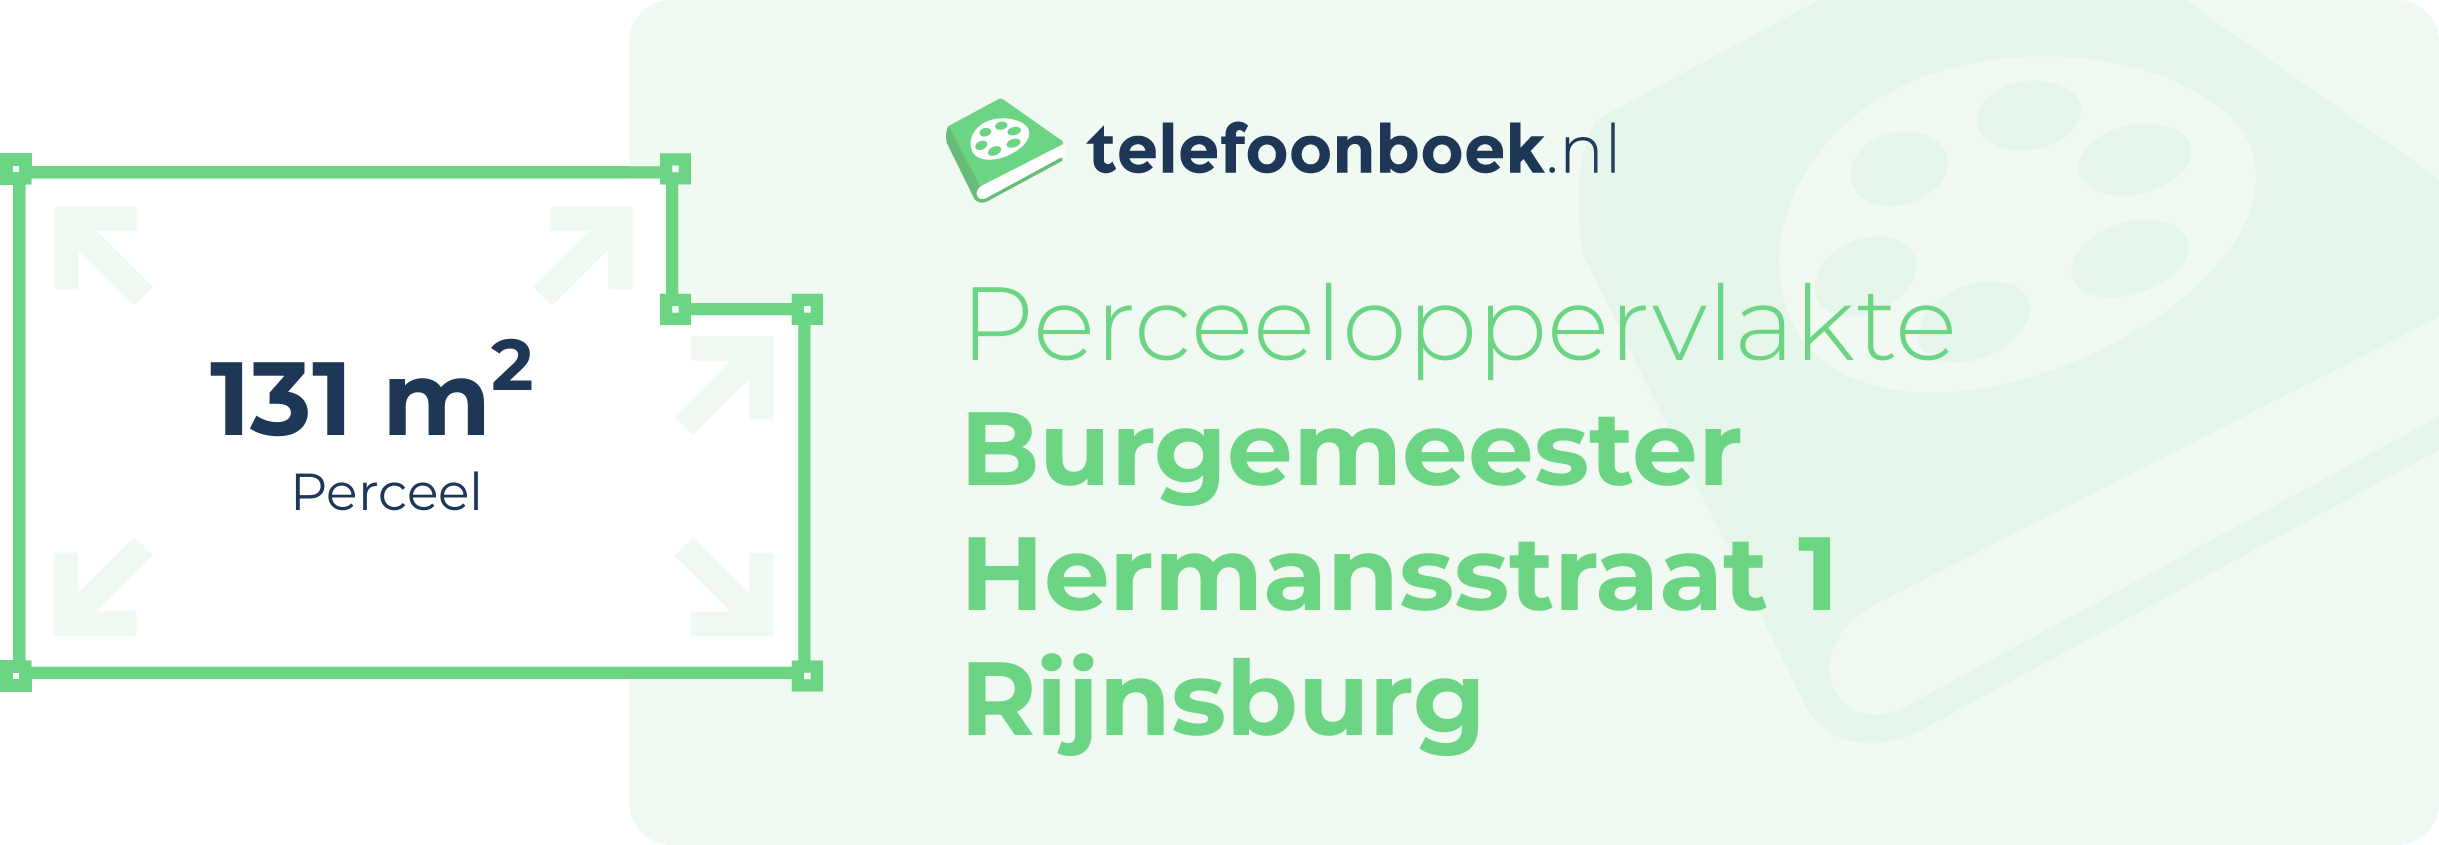 Perceeloppervlakte Burgemeester Hermansstraat 1 Rijnsburg